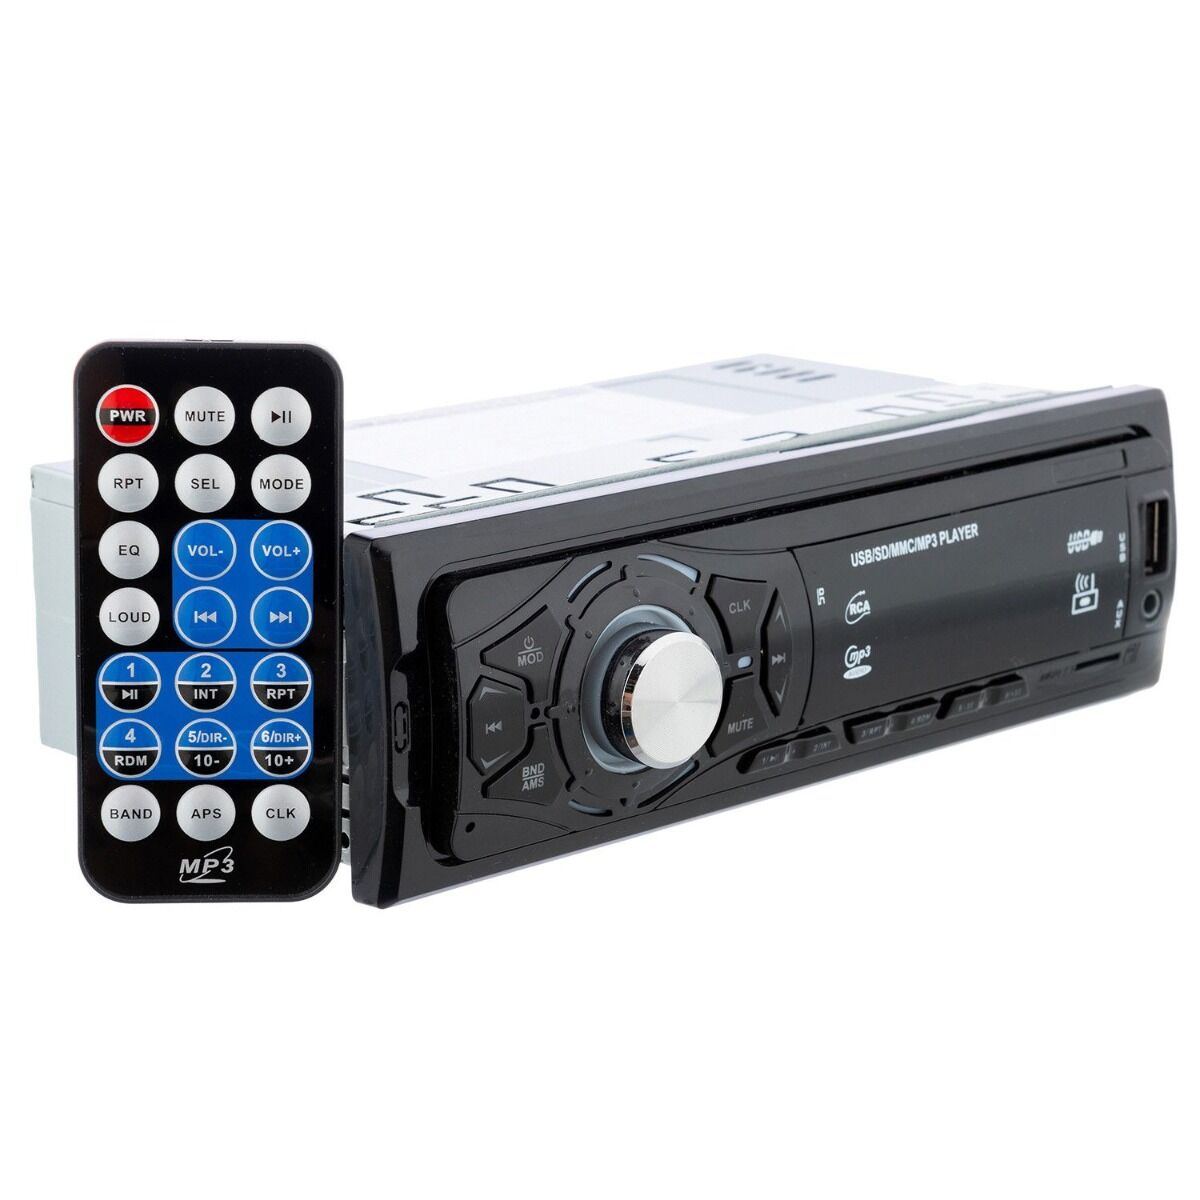 Radio cu MP3 Player Soundvox 305 pentru Masina, cu Telecomanda, Negru